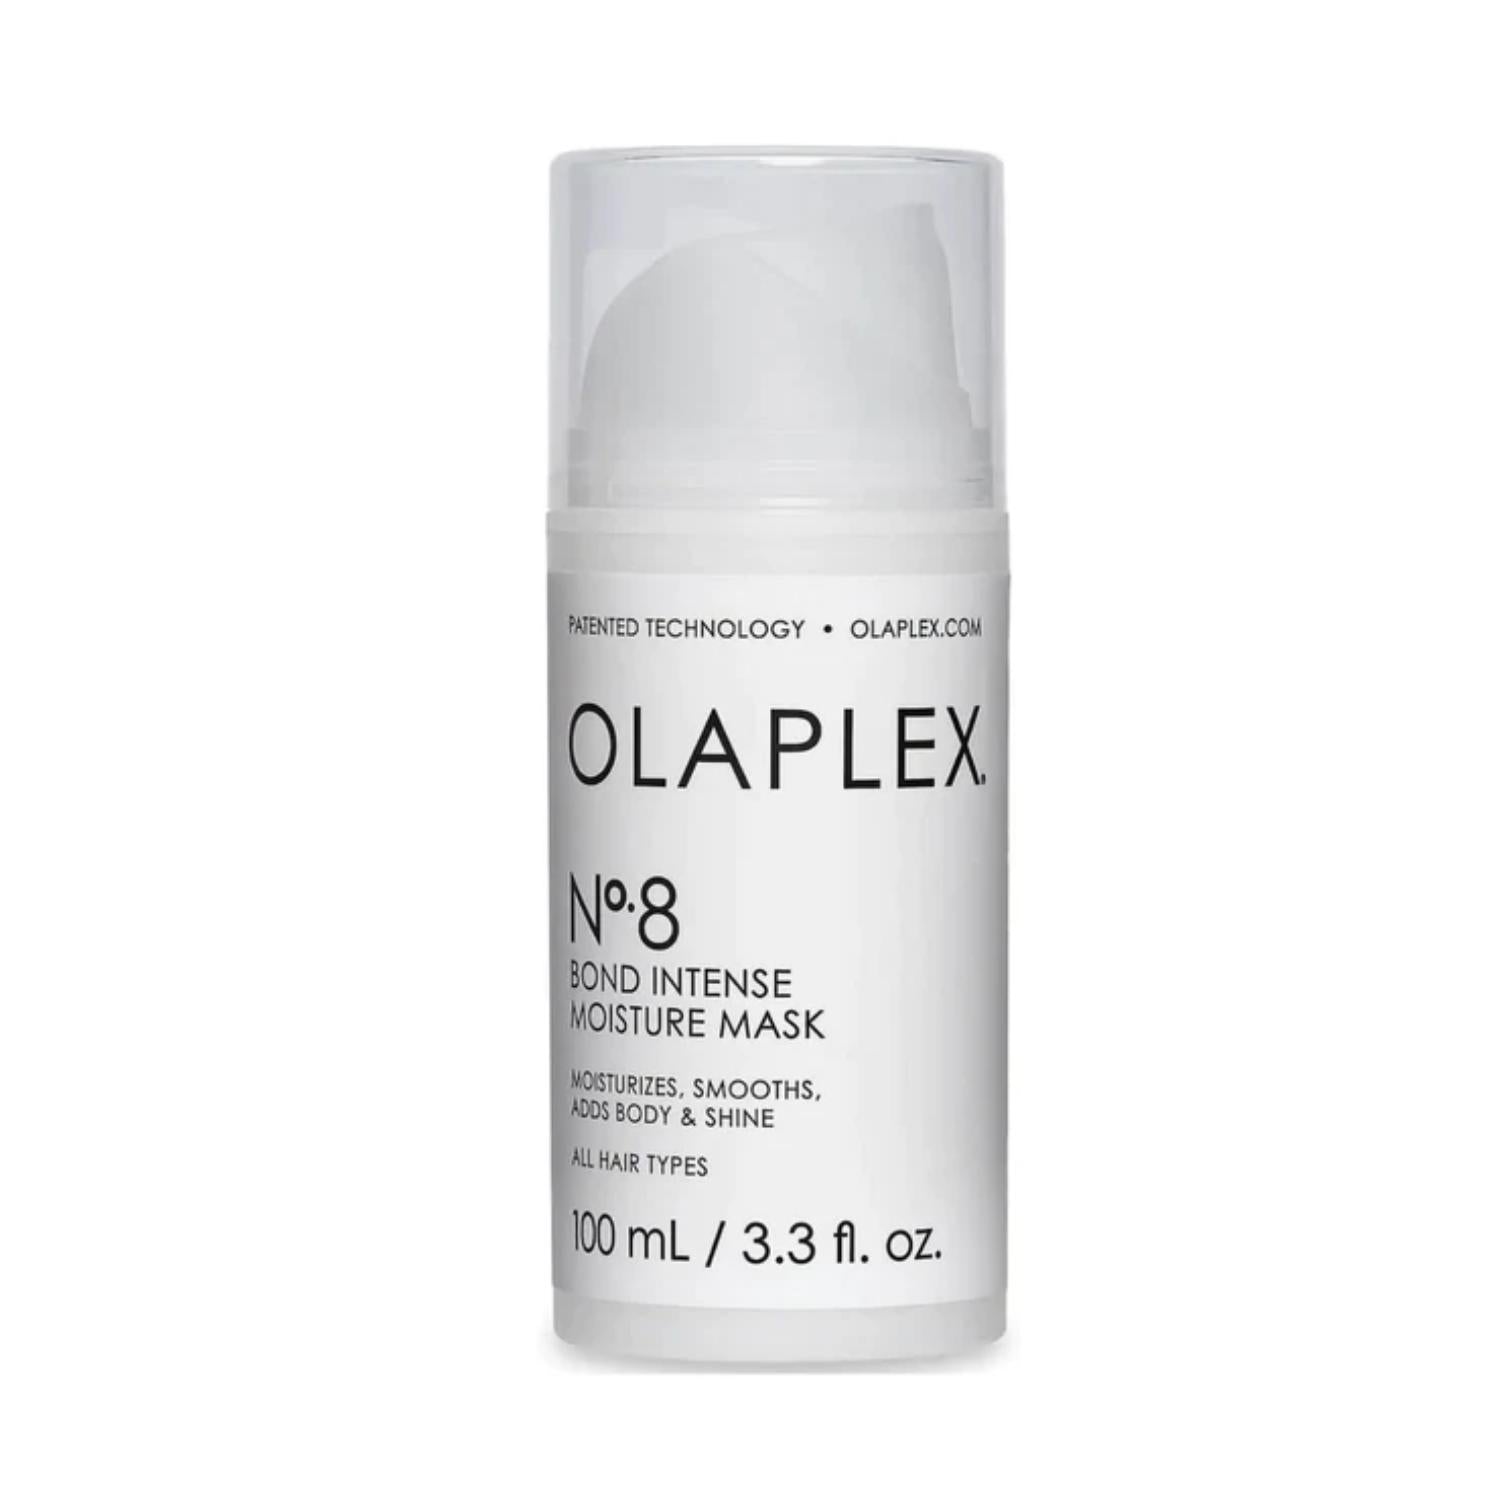 Olaplex No 8 Bond Intense Moisture Mask 100ml 1 Shaws Department Stores